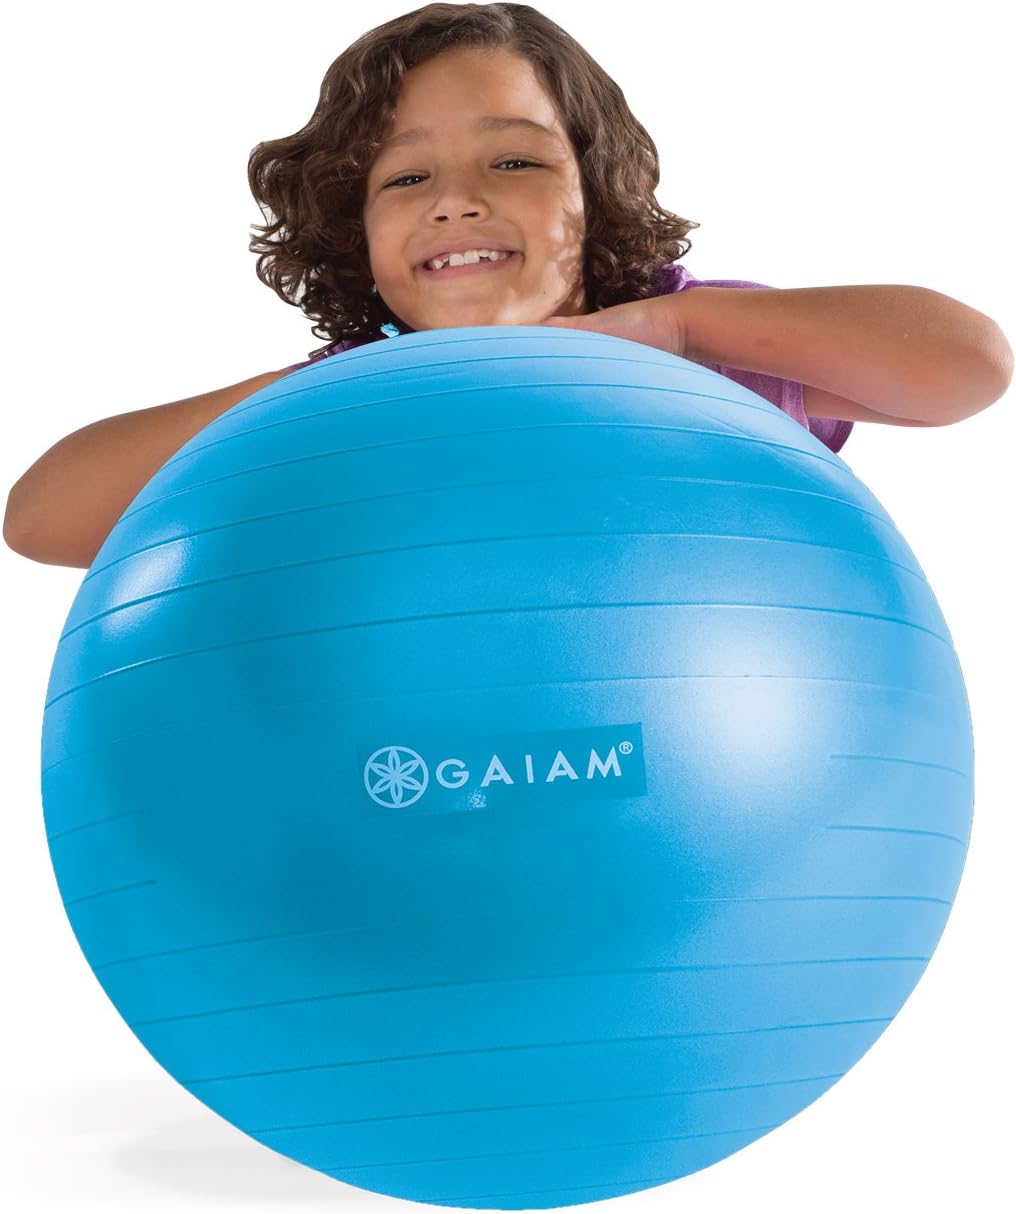 Gaiam Kids Balance Ball - Exercise Stability Yoga Ball, Kids Alternative Flexible Seating